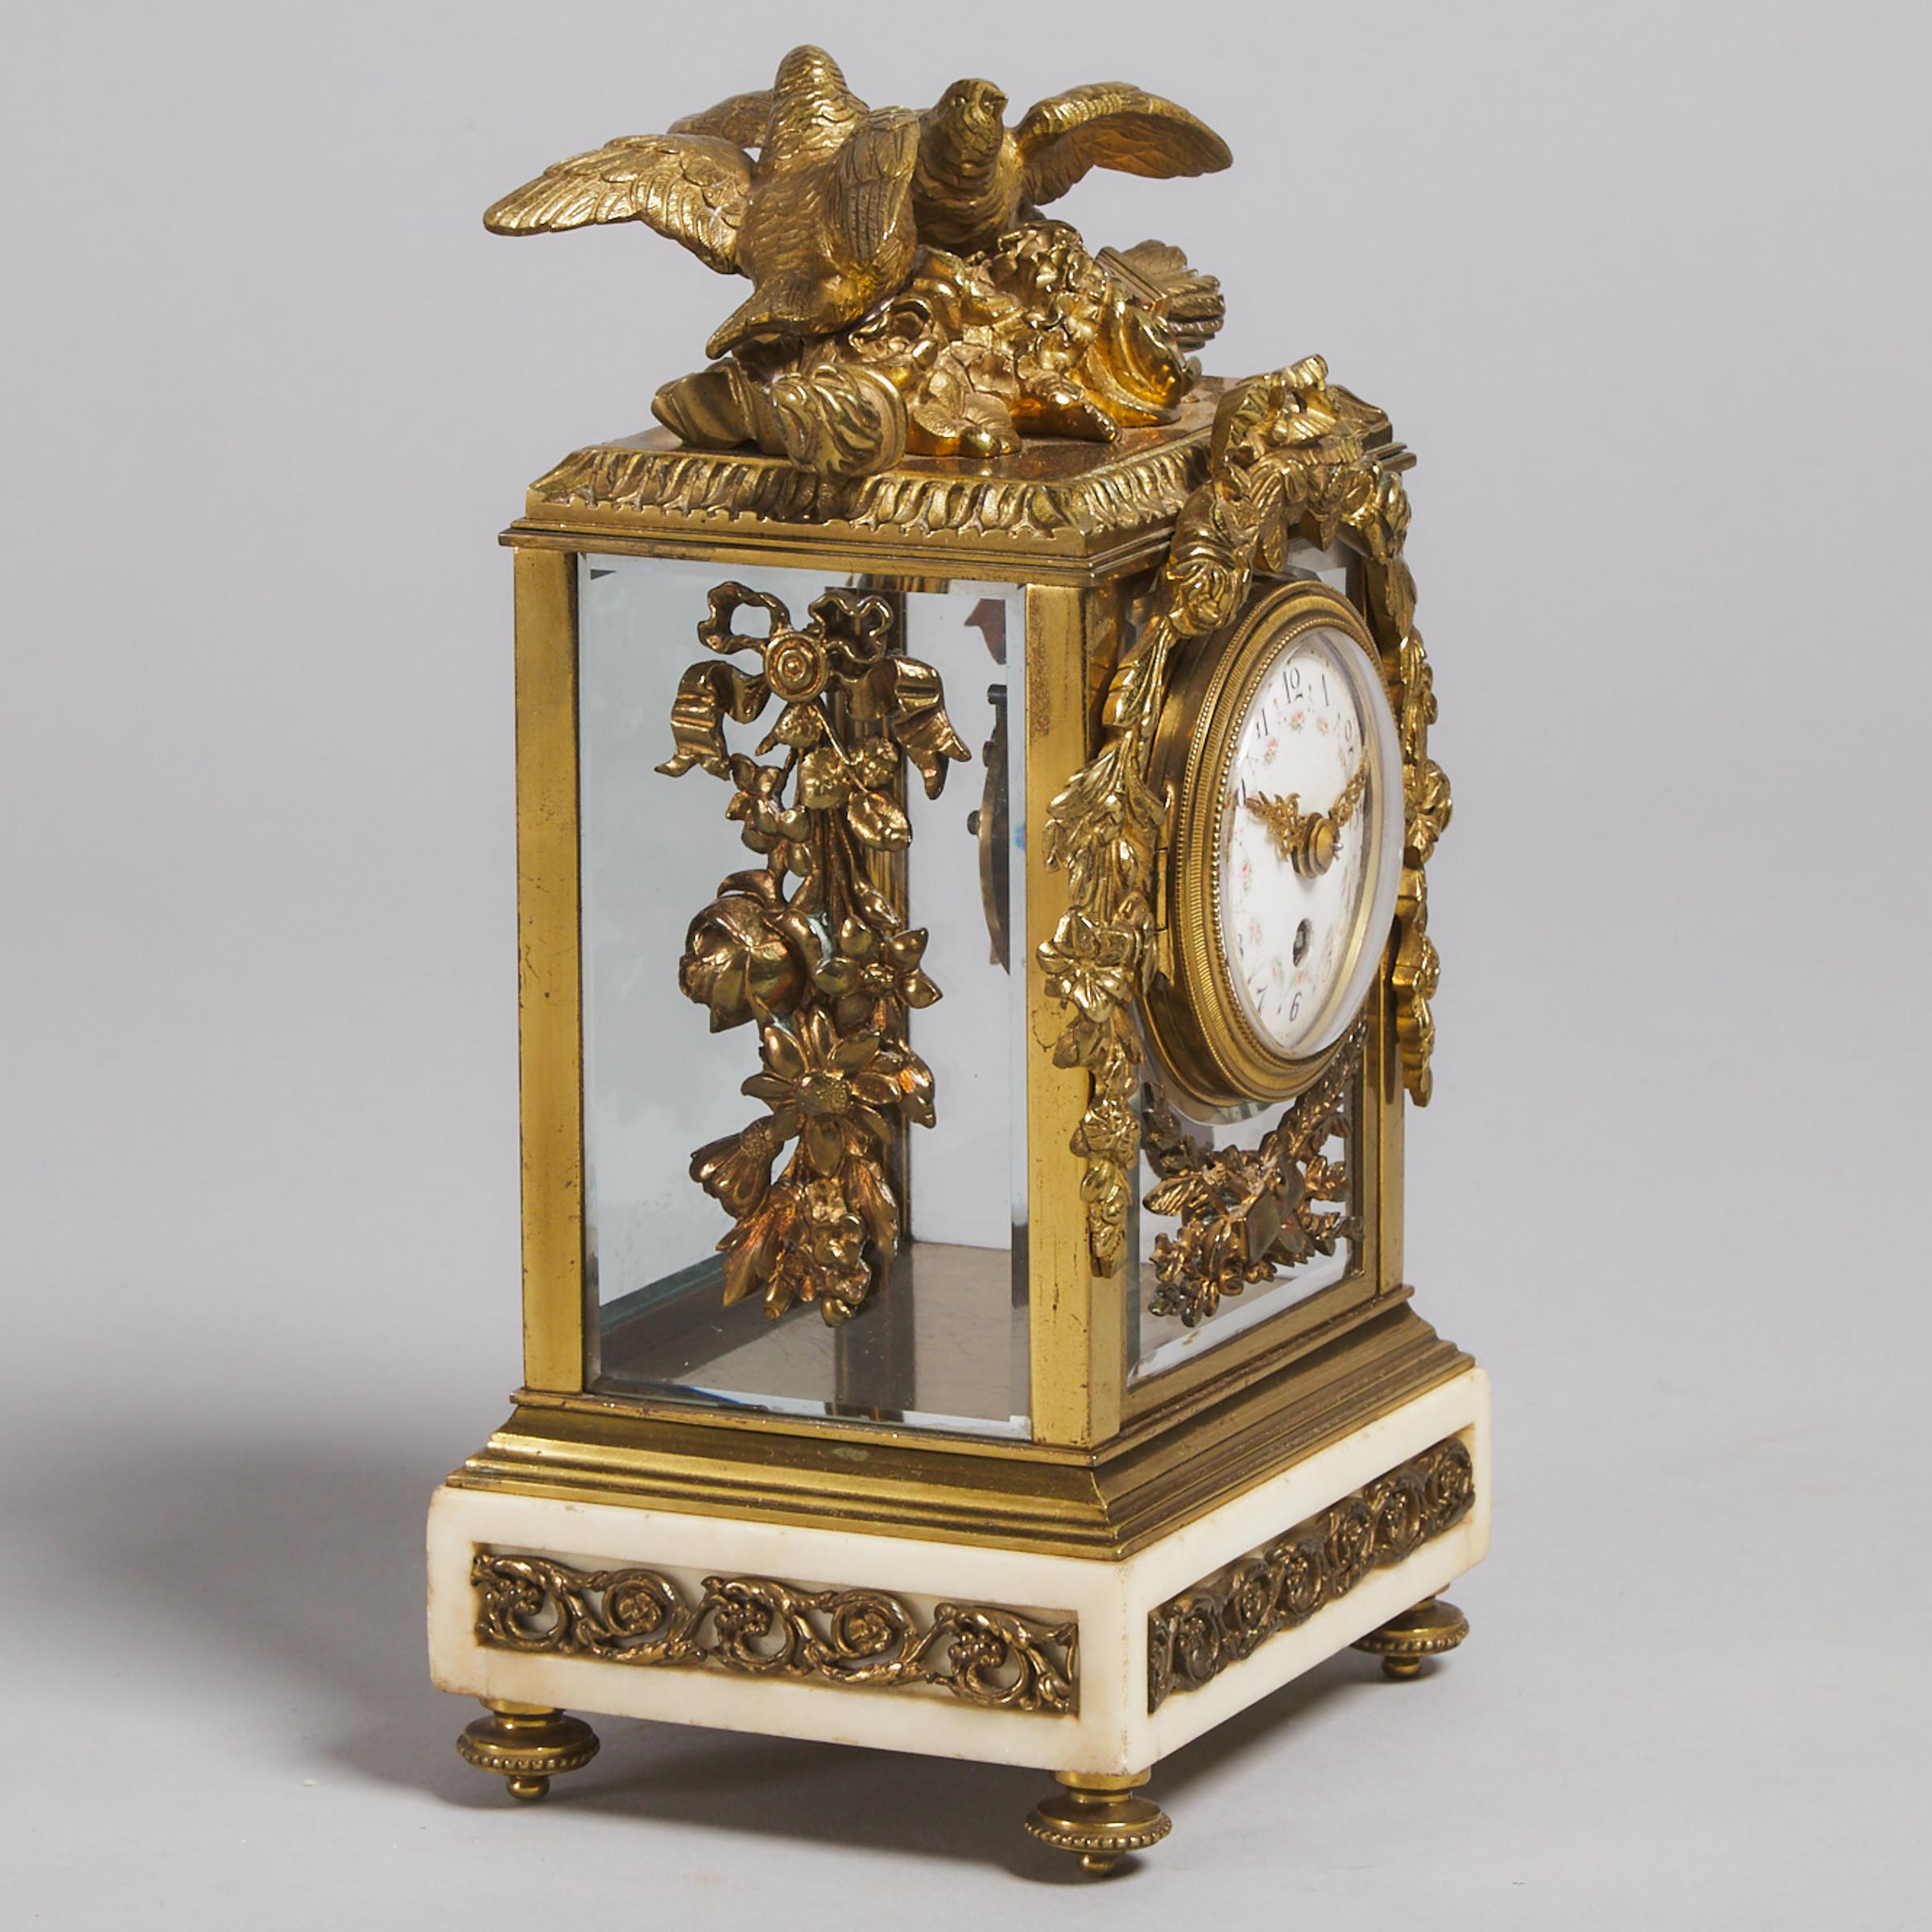 French Louis XVI Style Boudoir Timepiece, mid-late 19th century